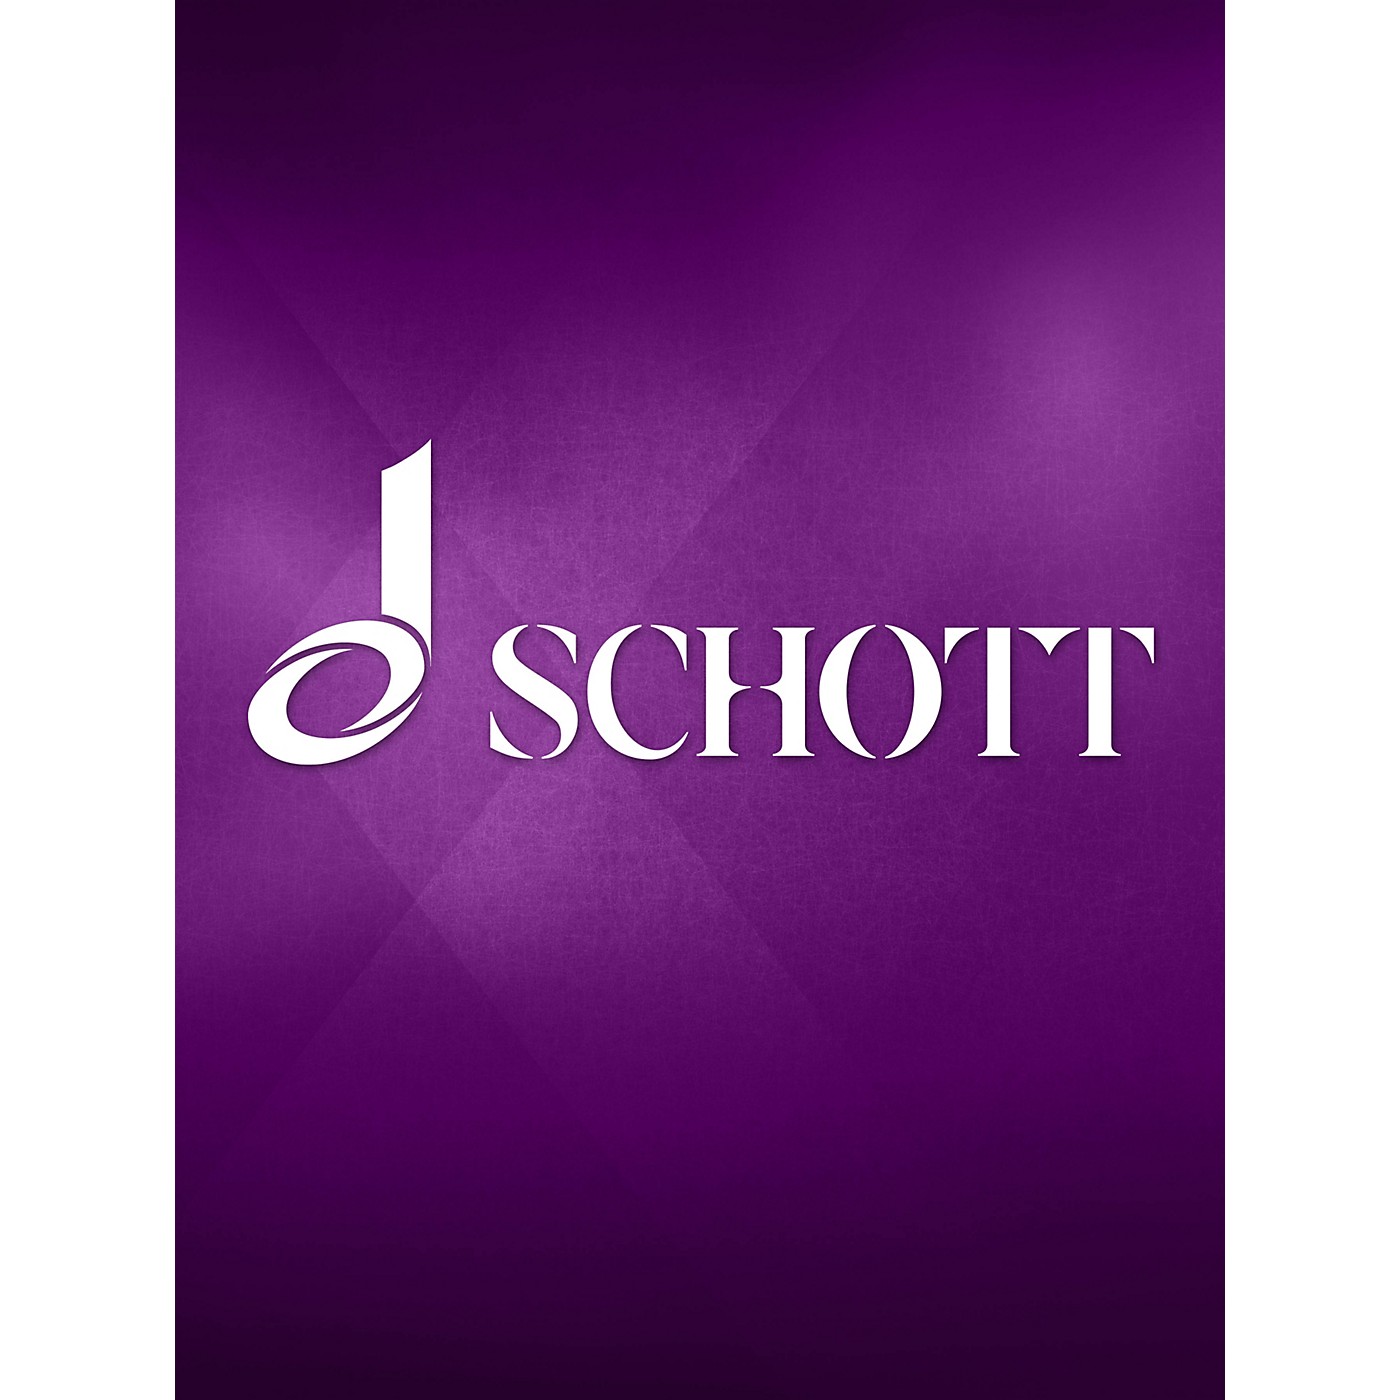 Schott Palestrina (Vocal Score) Composed by Hans Pfitzner thumbnail